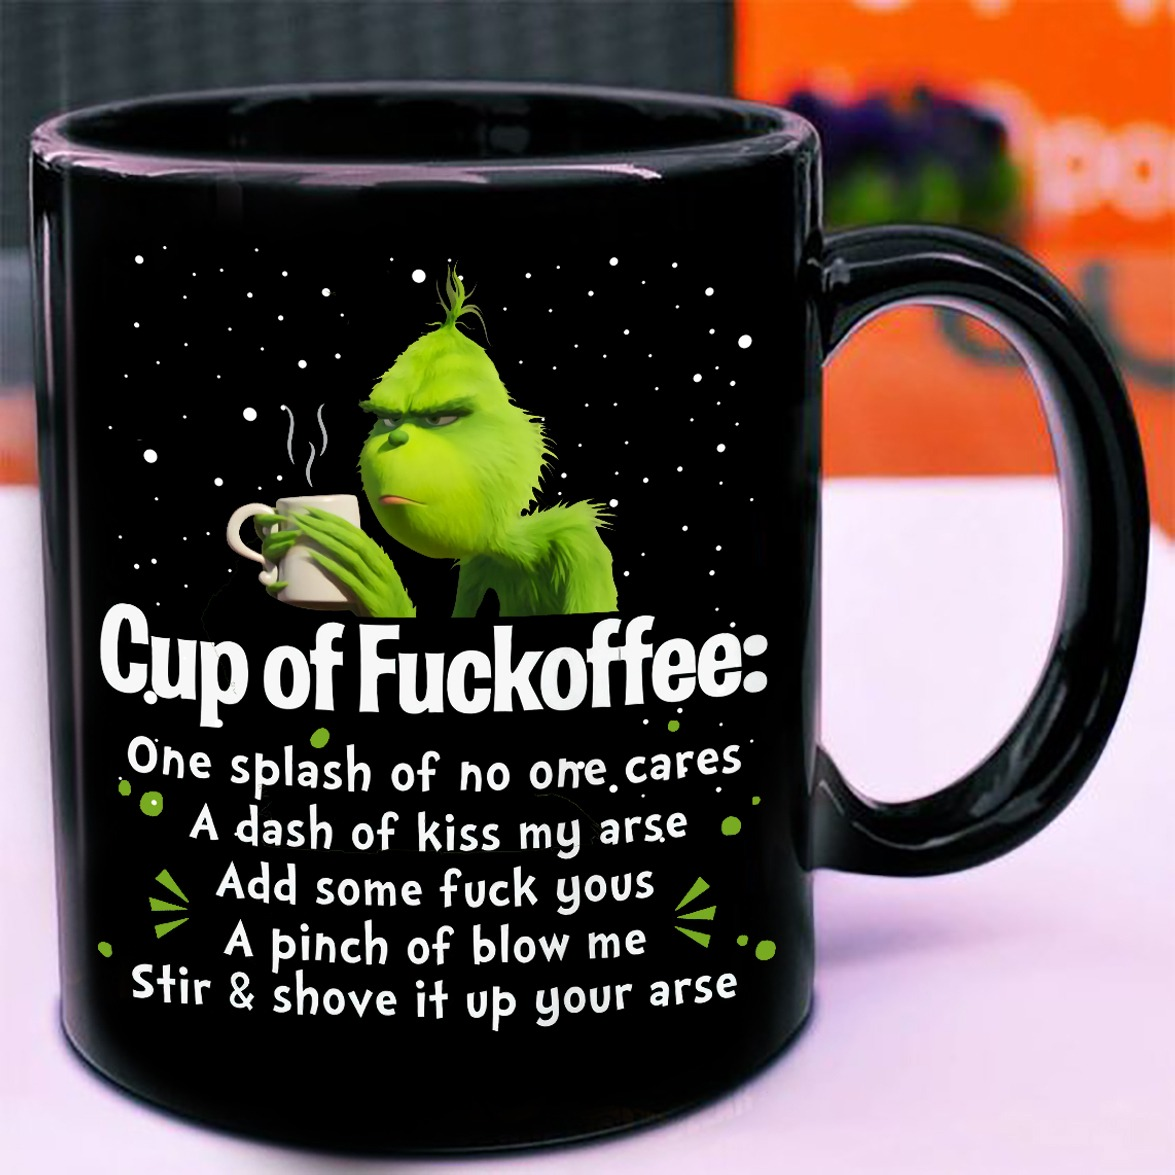 The Grinch Cup of fuckoffeee Christmas mug